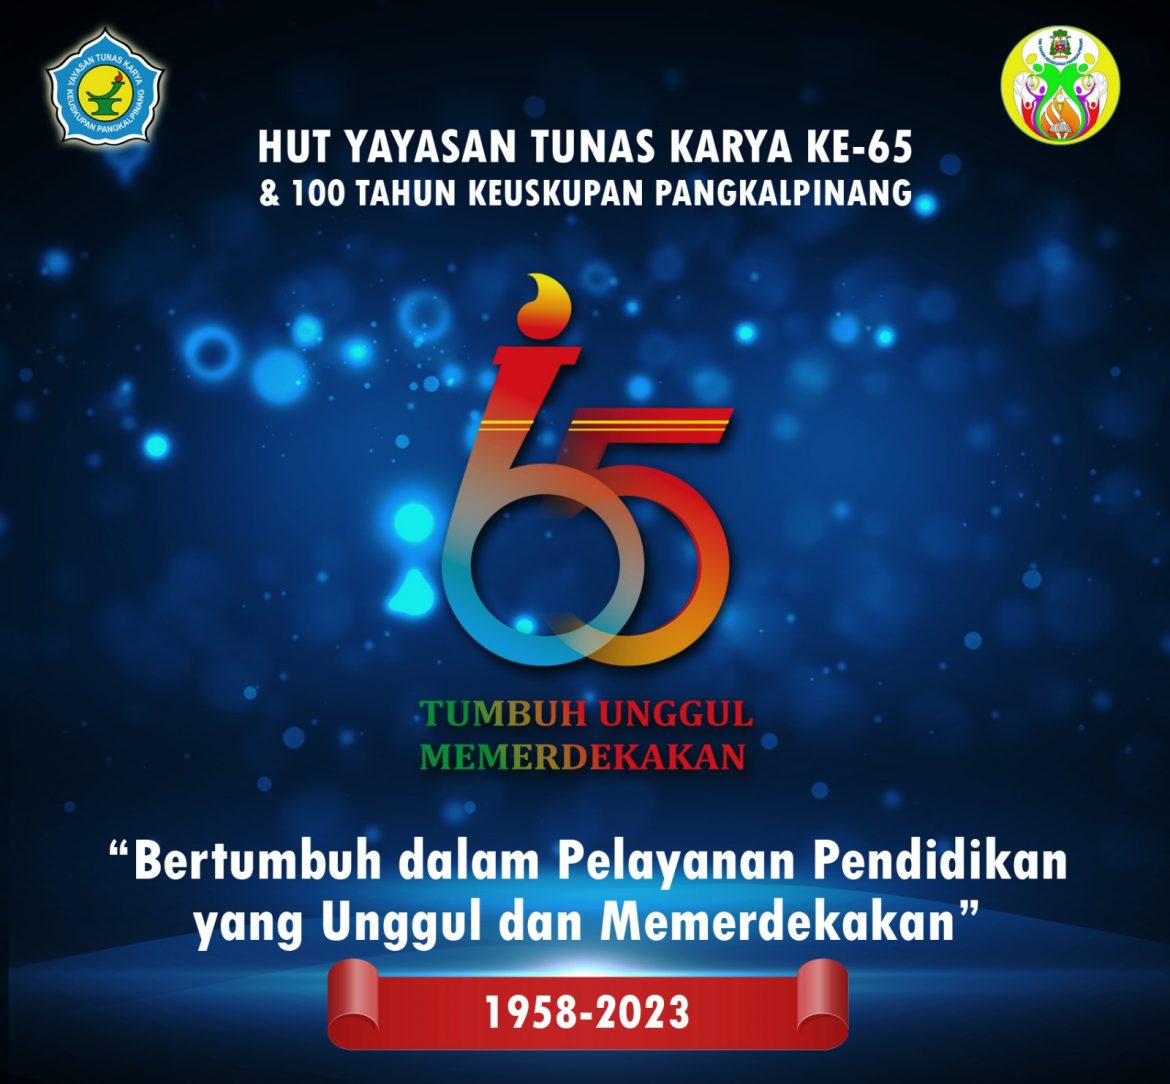 Ulang Tahun Ke 65 Seluruh Guru Dan Pegawai Ytk Wilayah Pulau Bangka Berkumpul Di Pangkalpinang 2916